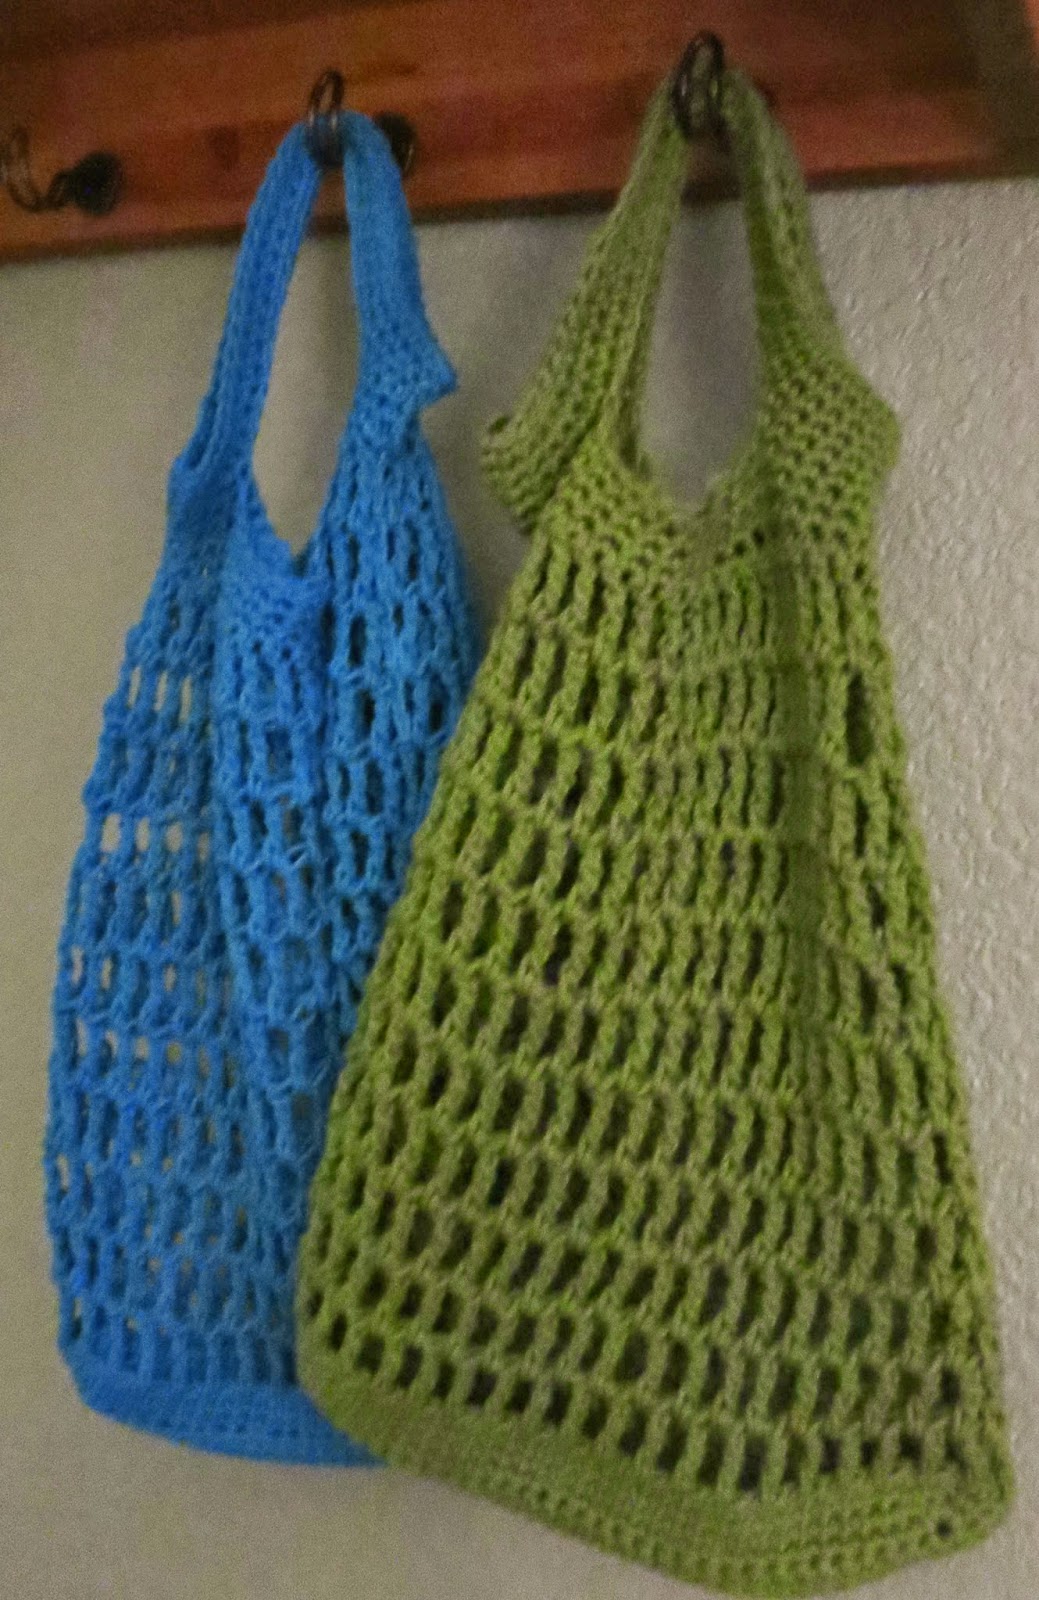 Da's Crochet Connection: Small Crochet Market Bag Pattern